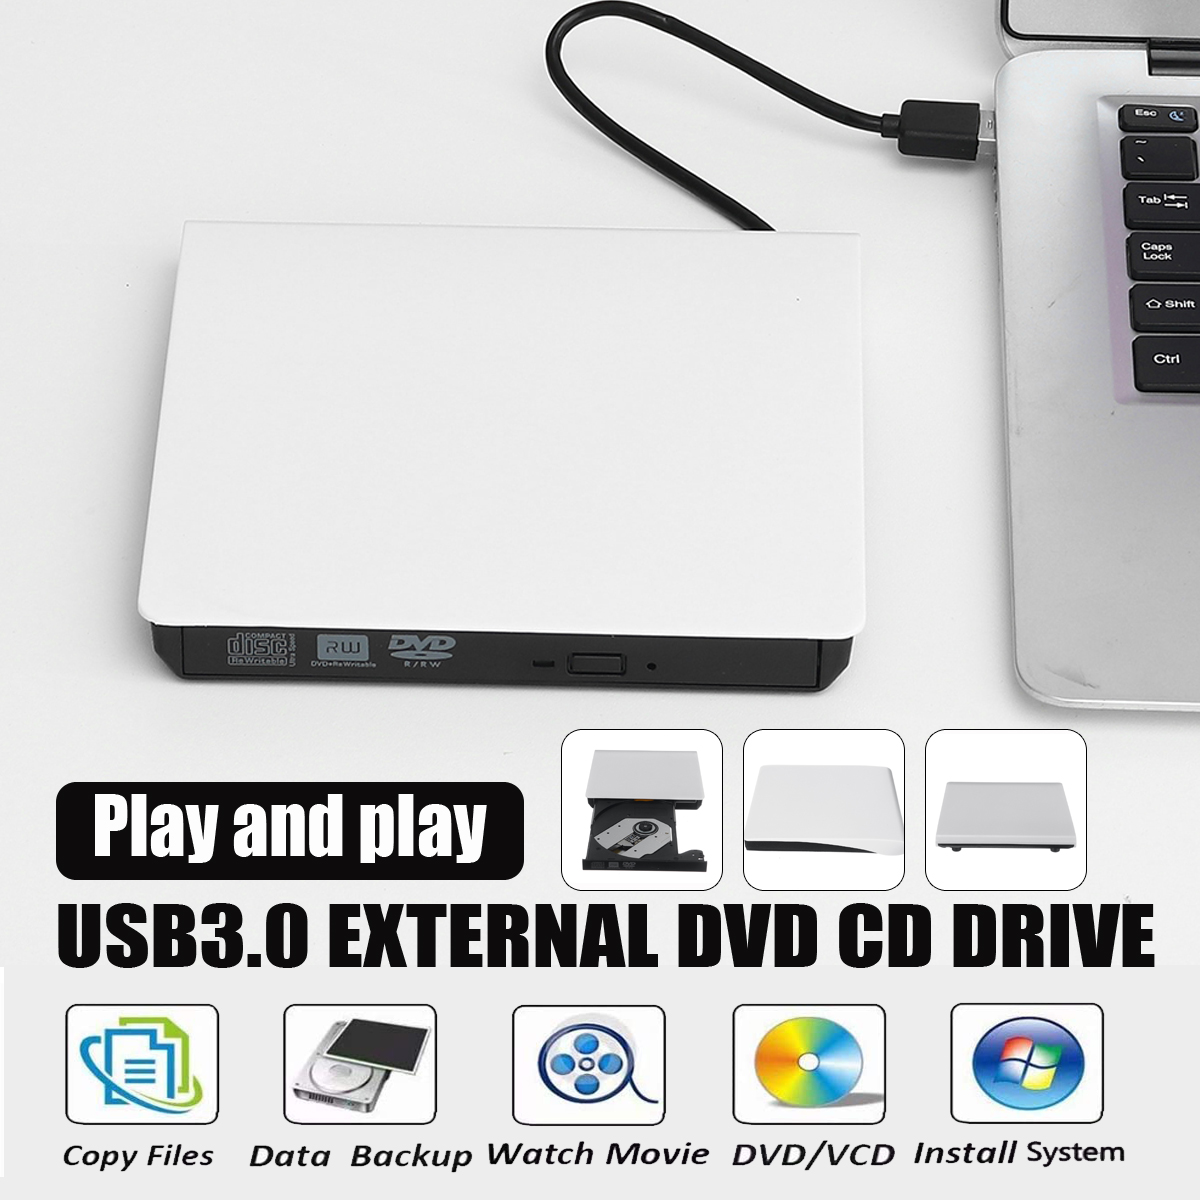 USB30-External-Optical-Drive-USB-CD-DVD-Burner-DVD-RW-Player-Writer-Rewriter-Support-2MB-Data-Transf-1770912-1